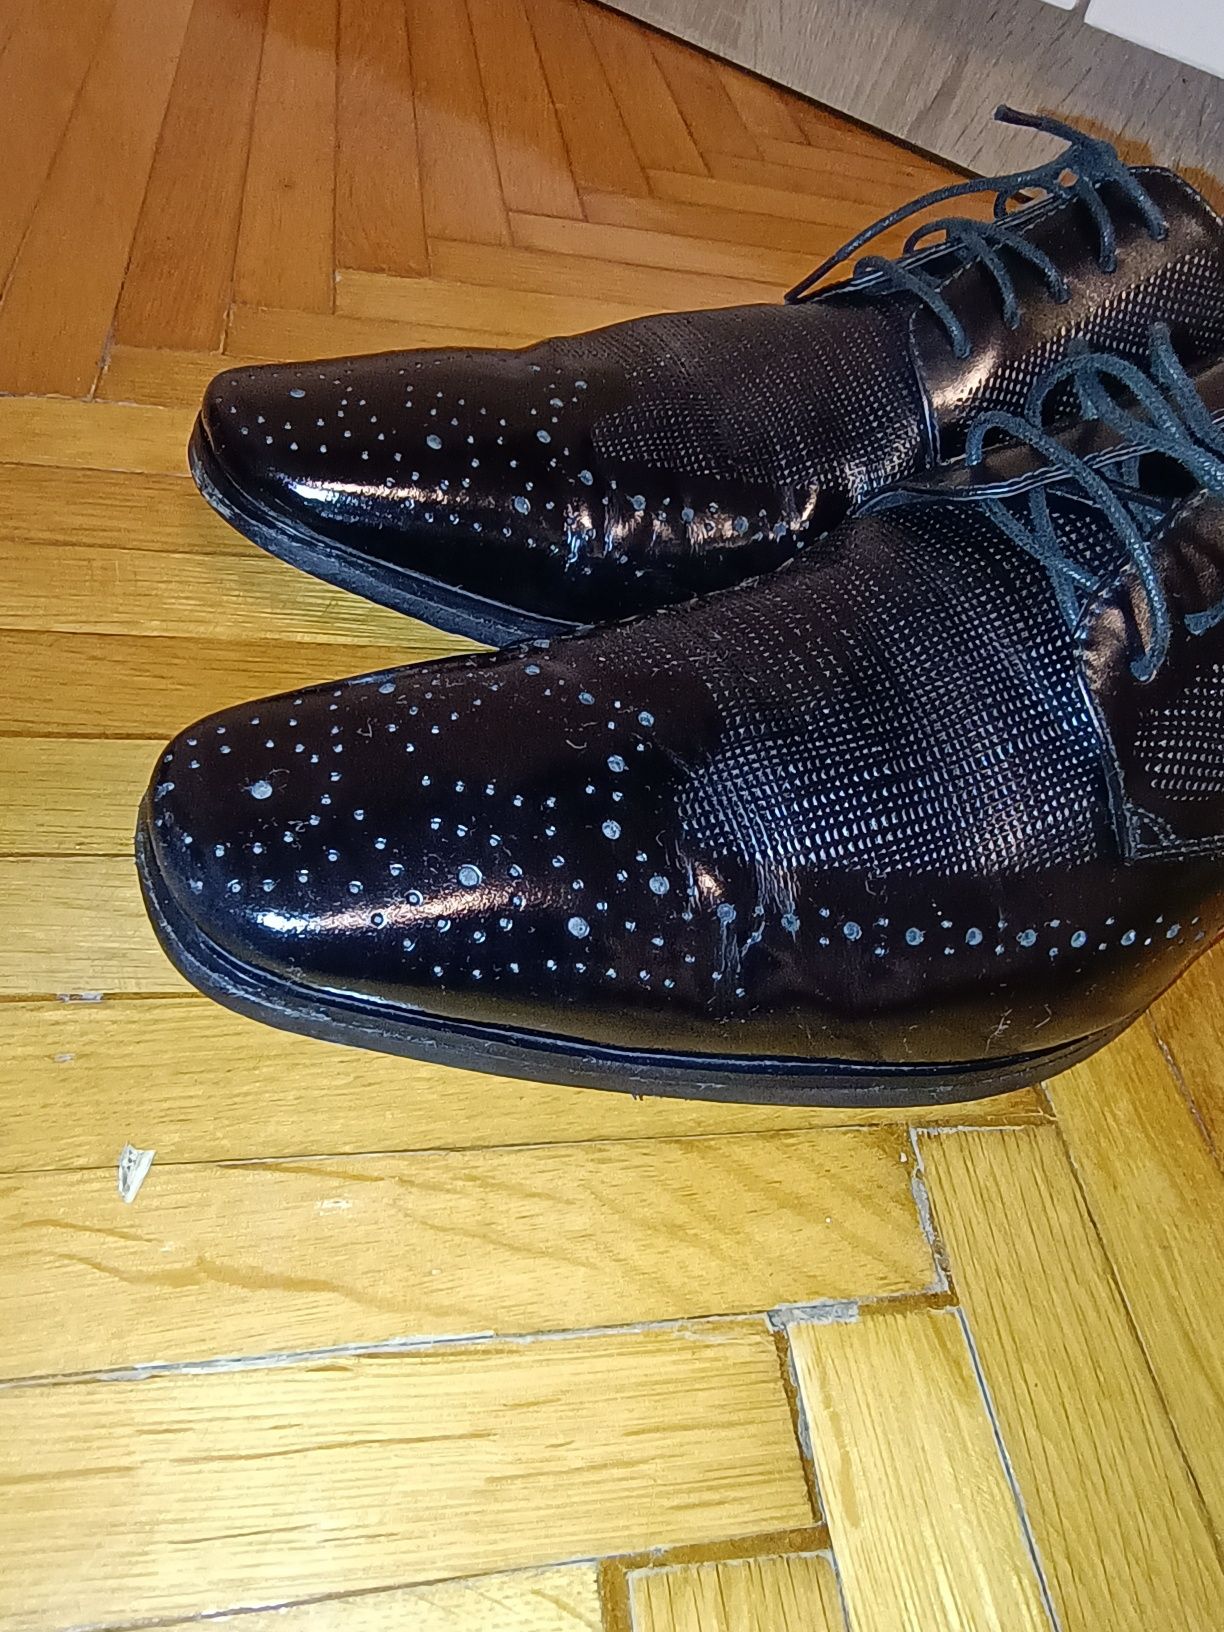 Pantofi eleganti barbat Ferridimani 44